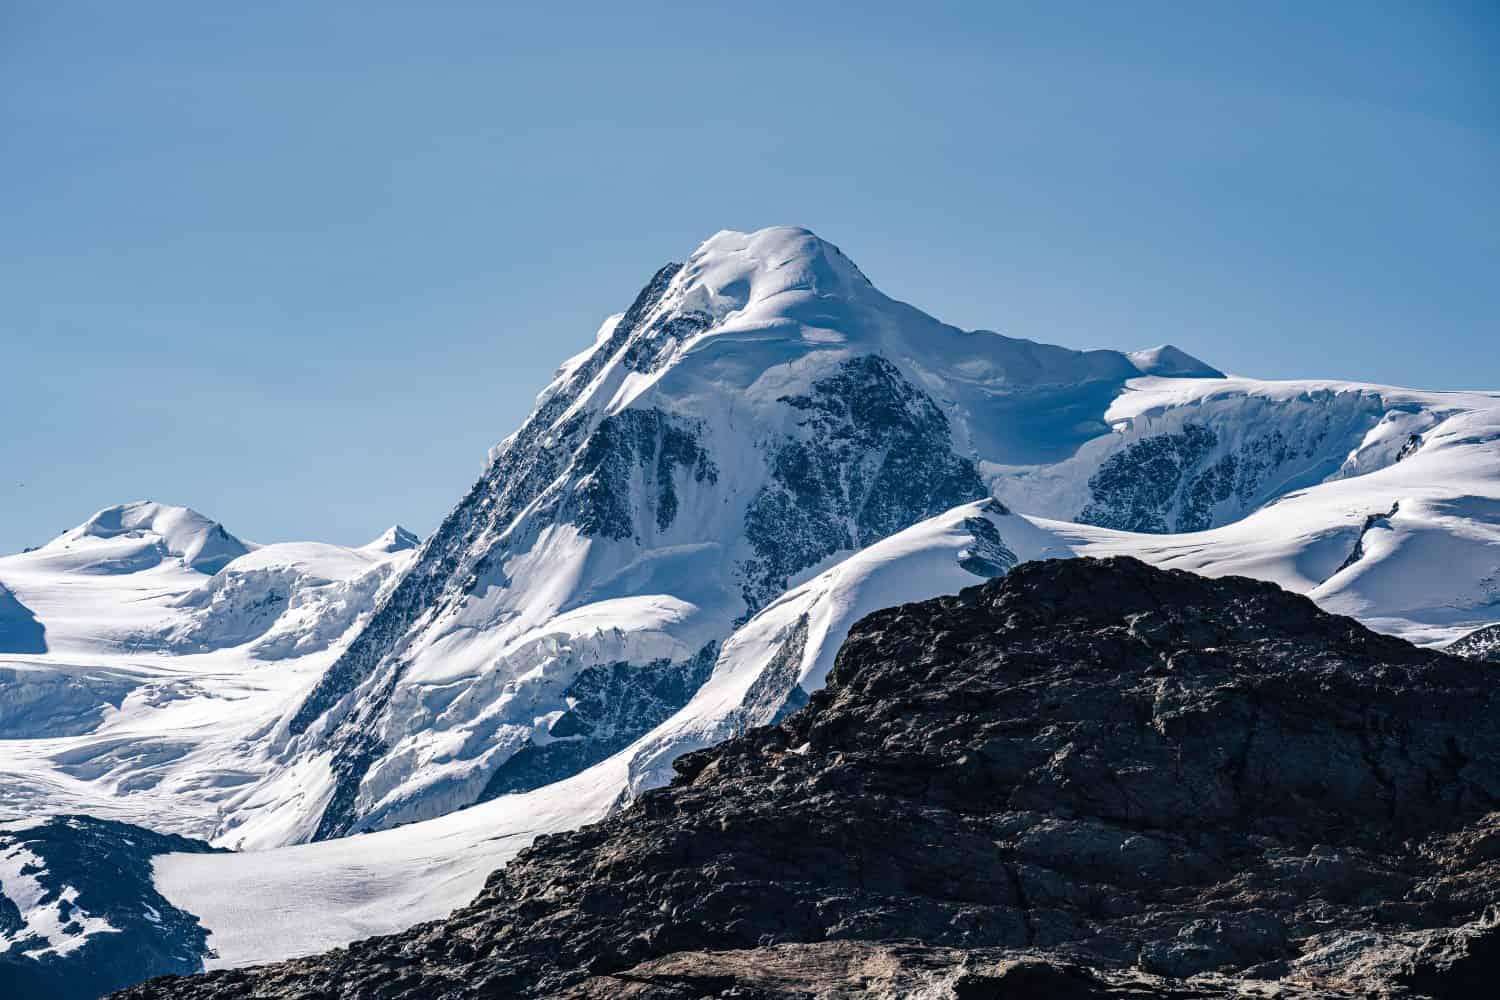 The summit of Liskamm, famous alpine peak above Zermatt, Switzerland. Moutain alpine landscape of Wallis. Snow and ice covered peak, Monte Rosa Glacier.